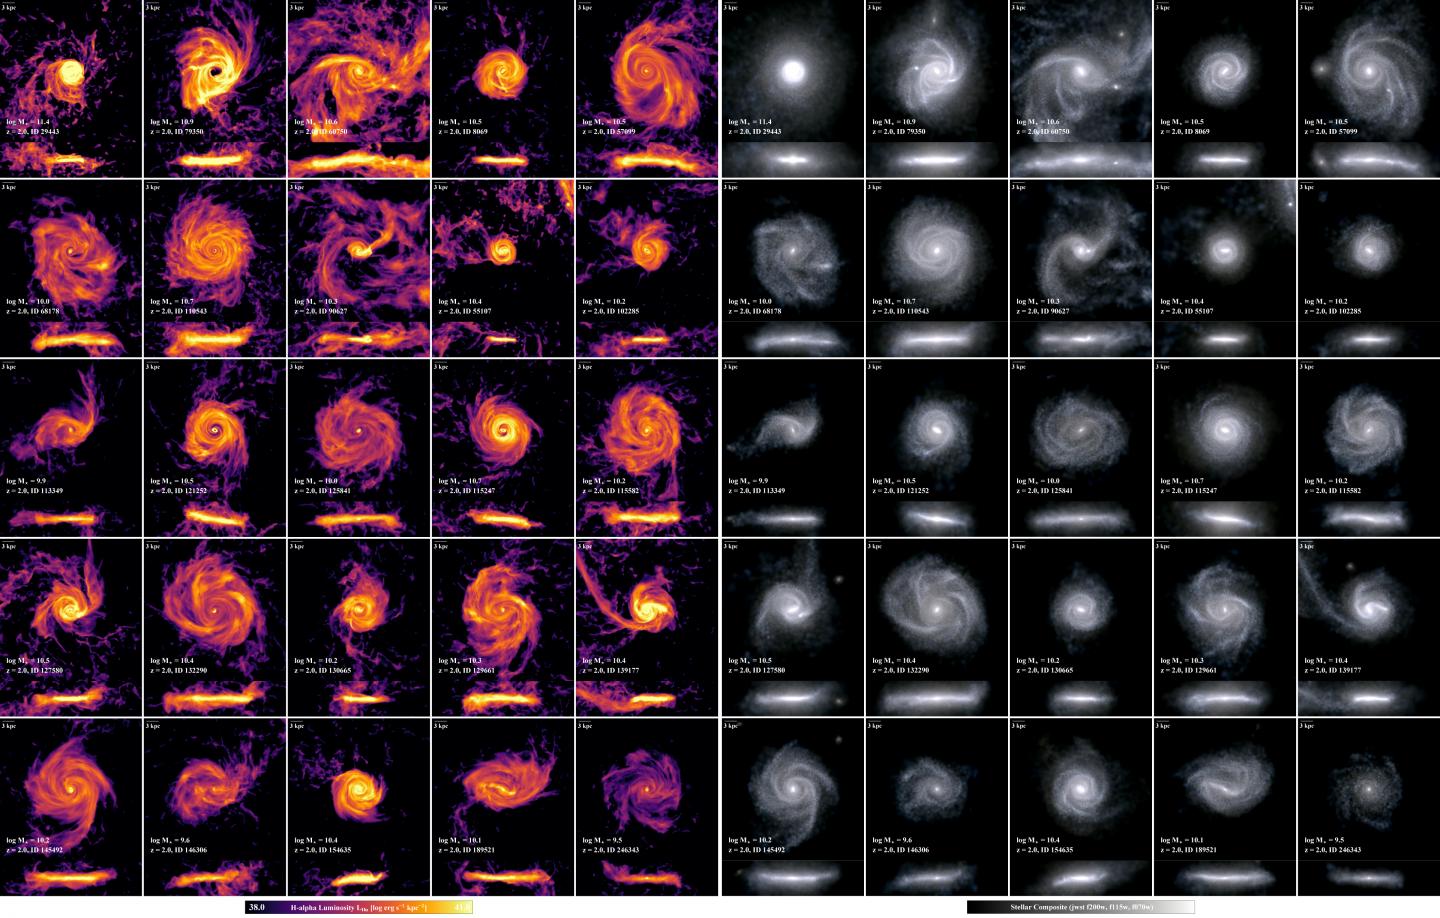 An ensemble of twenty-five disk galaxies